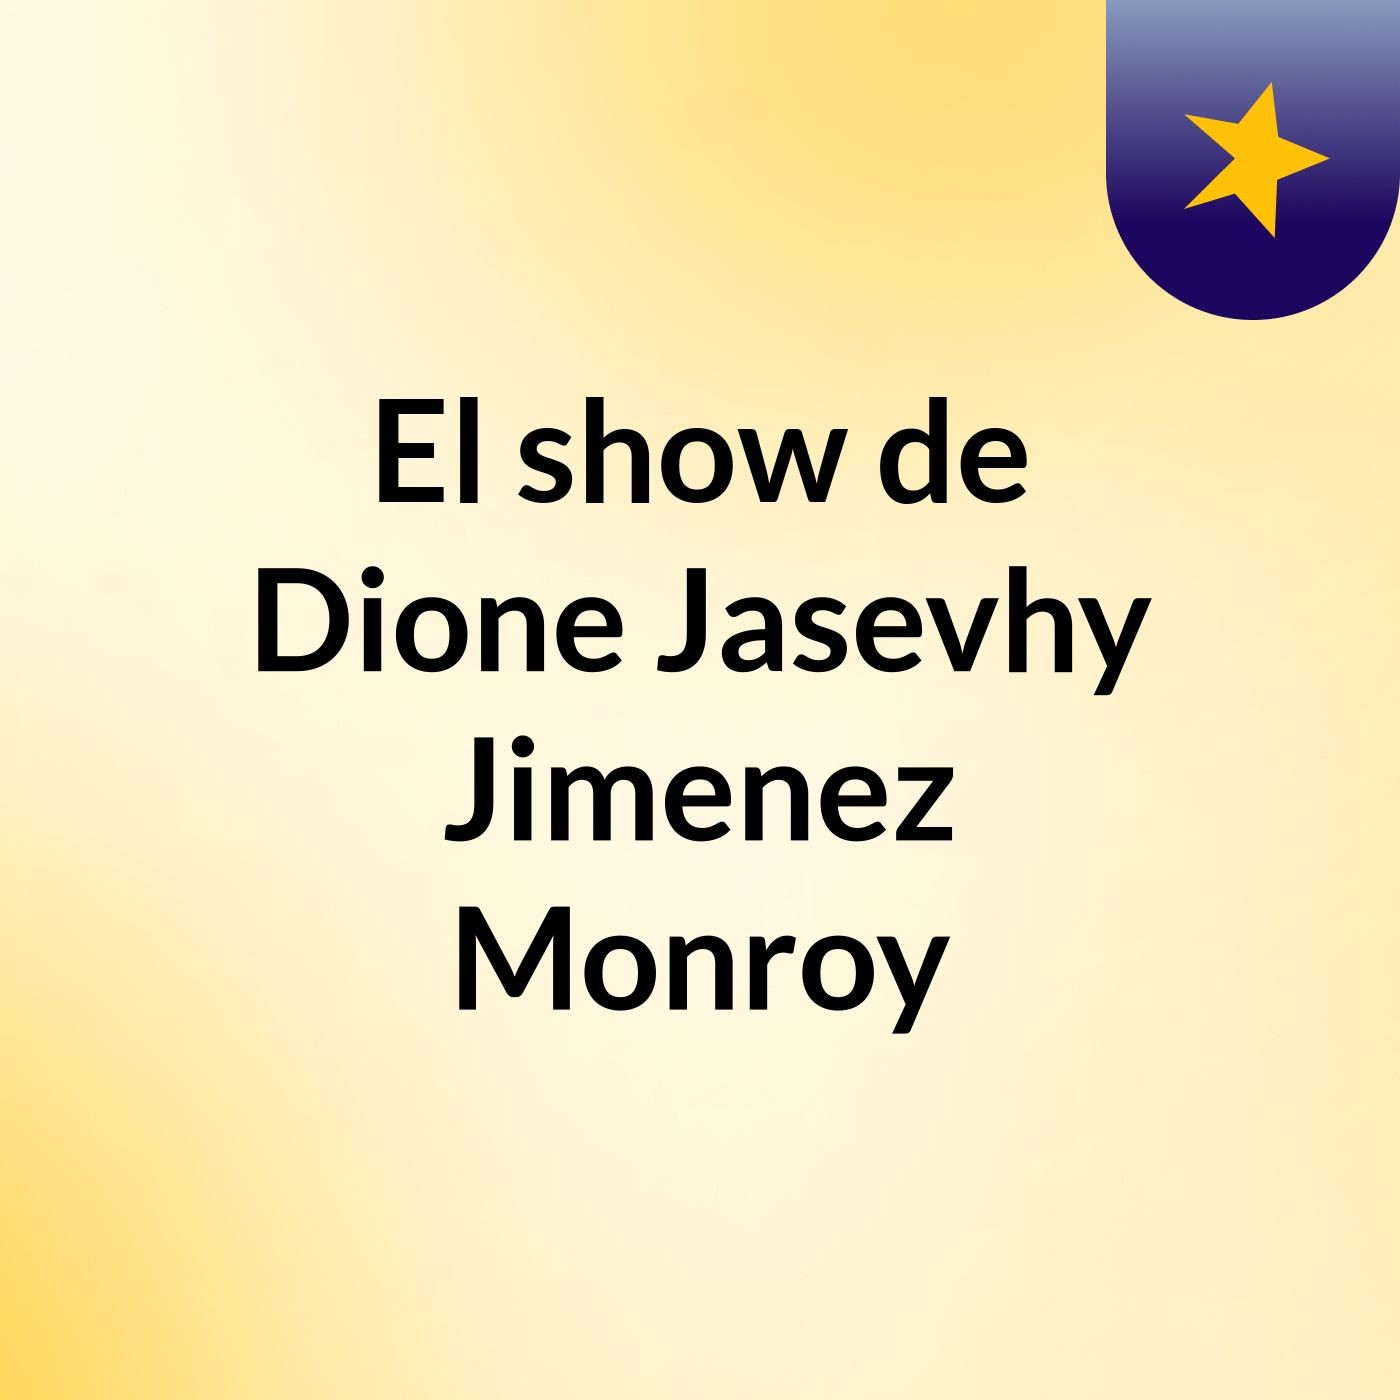 El show de Dione Jasevhy Jimenez Monroy